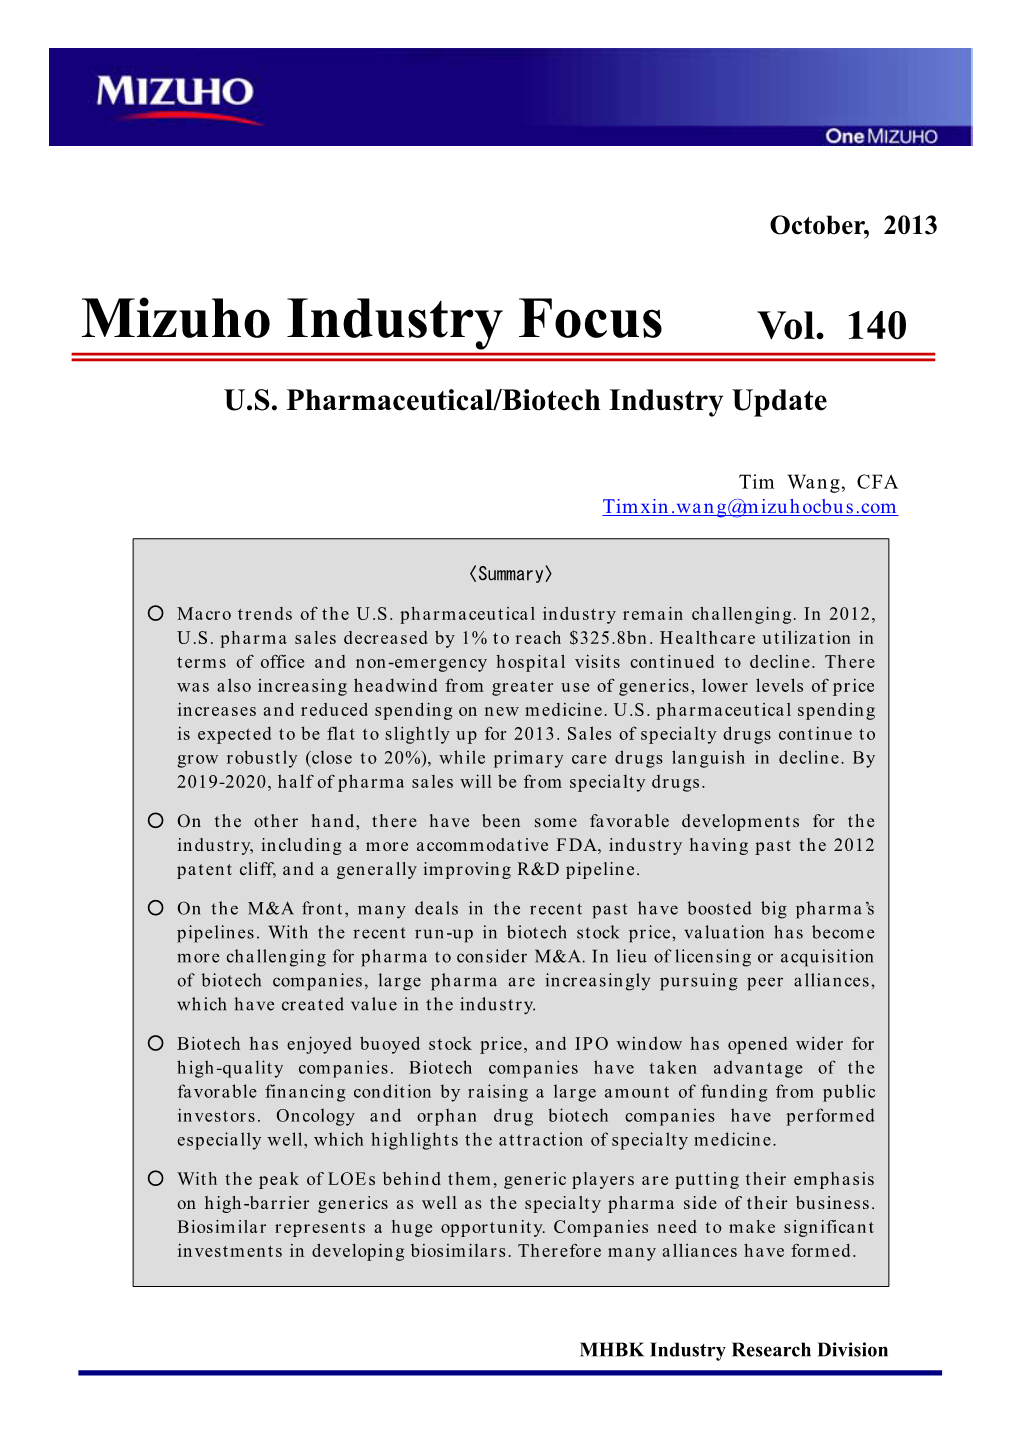 U.S. Pharmaceutical/Biotech Industry Update